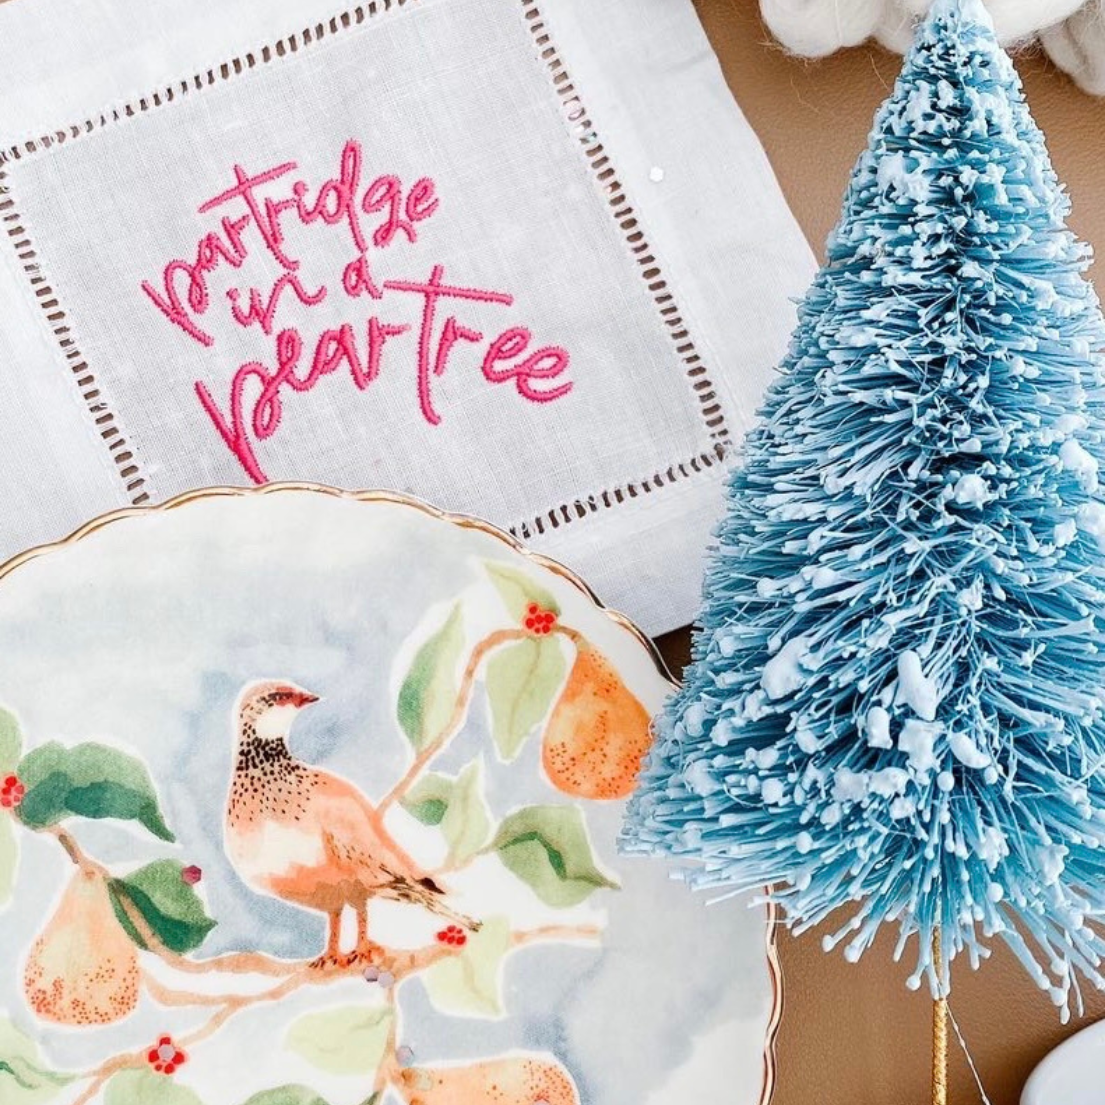 Twelve Days of Christmas Embroidered Cloth Napkins - Set of 12 napkins